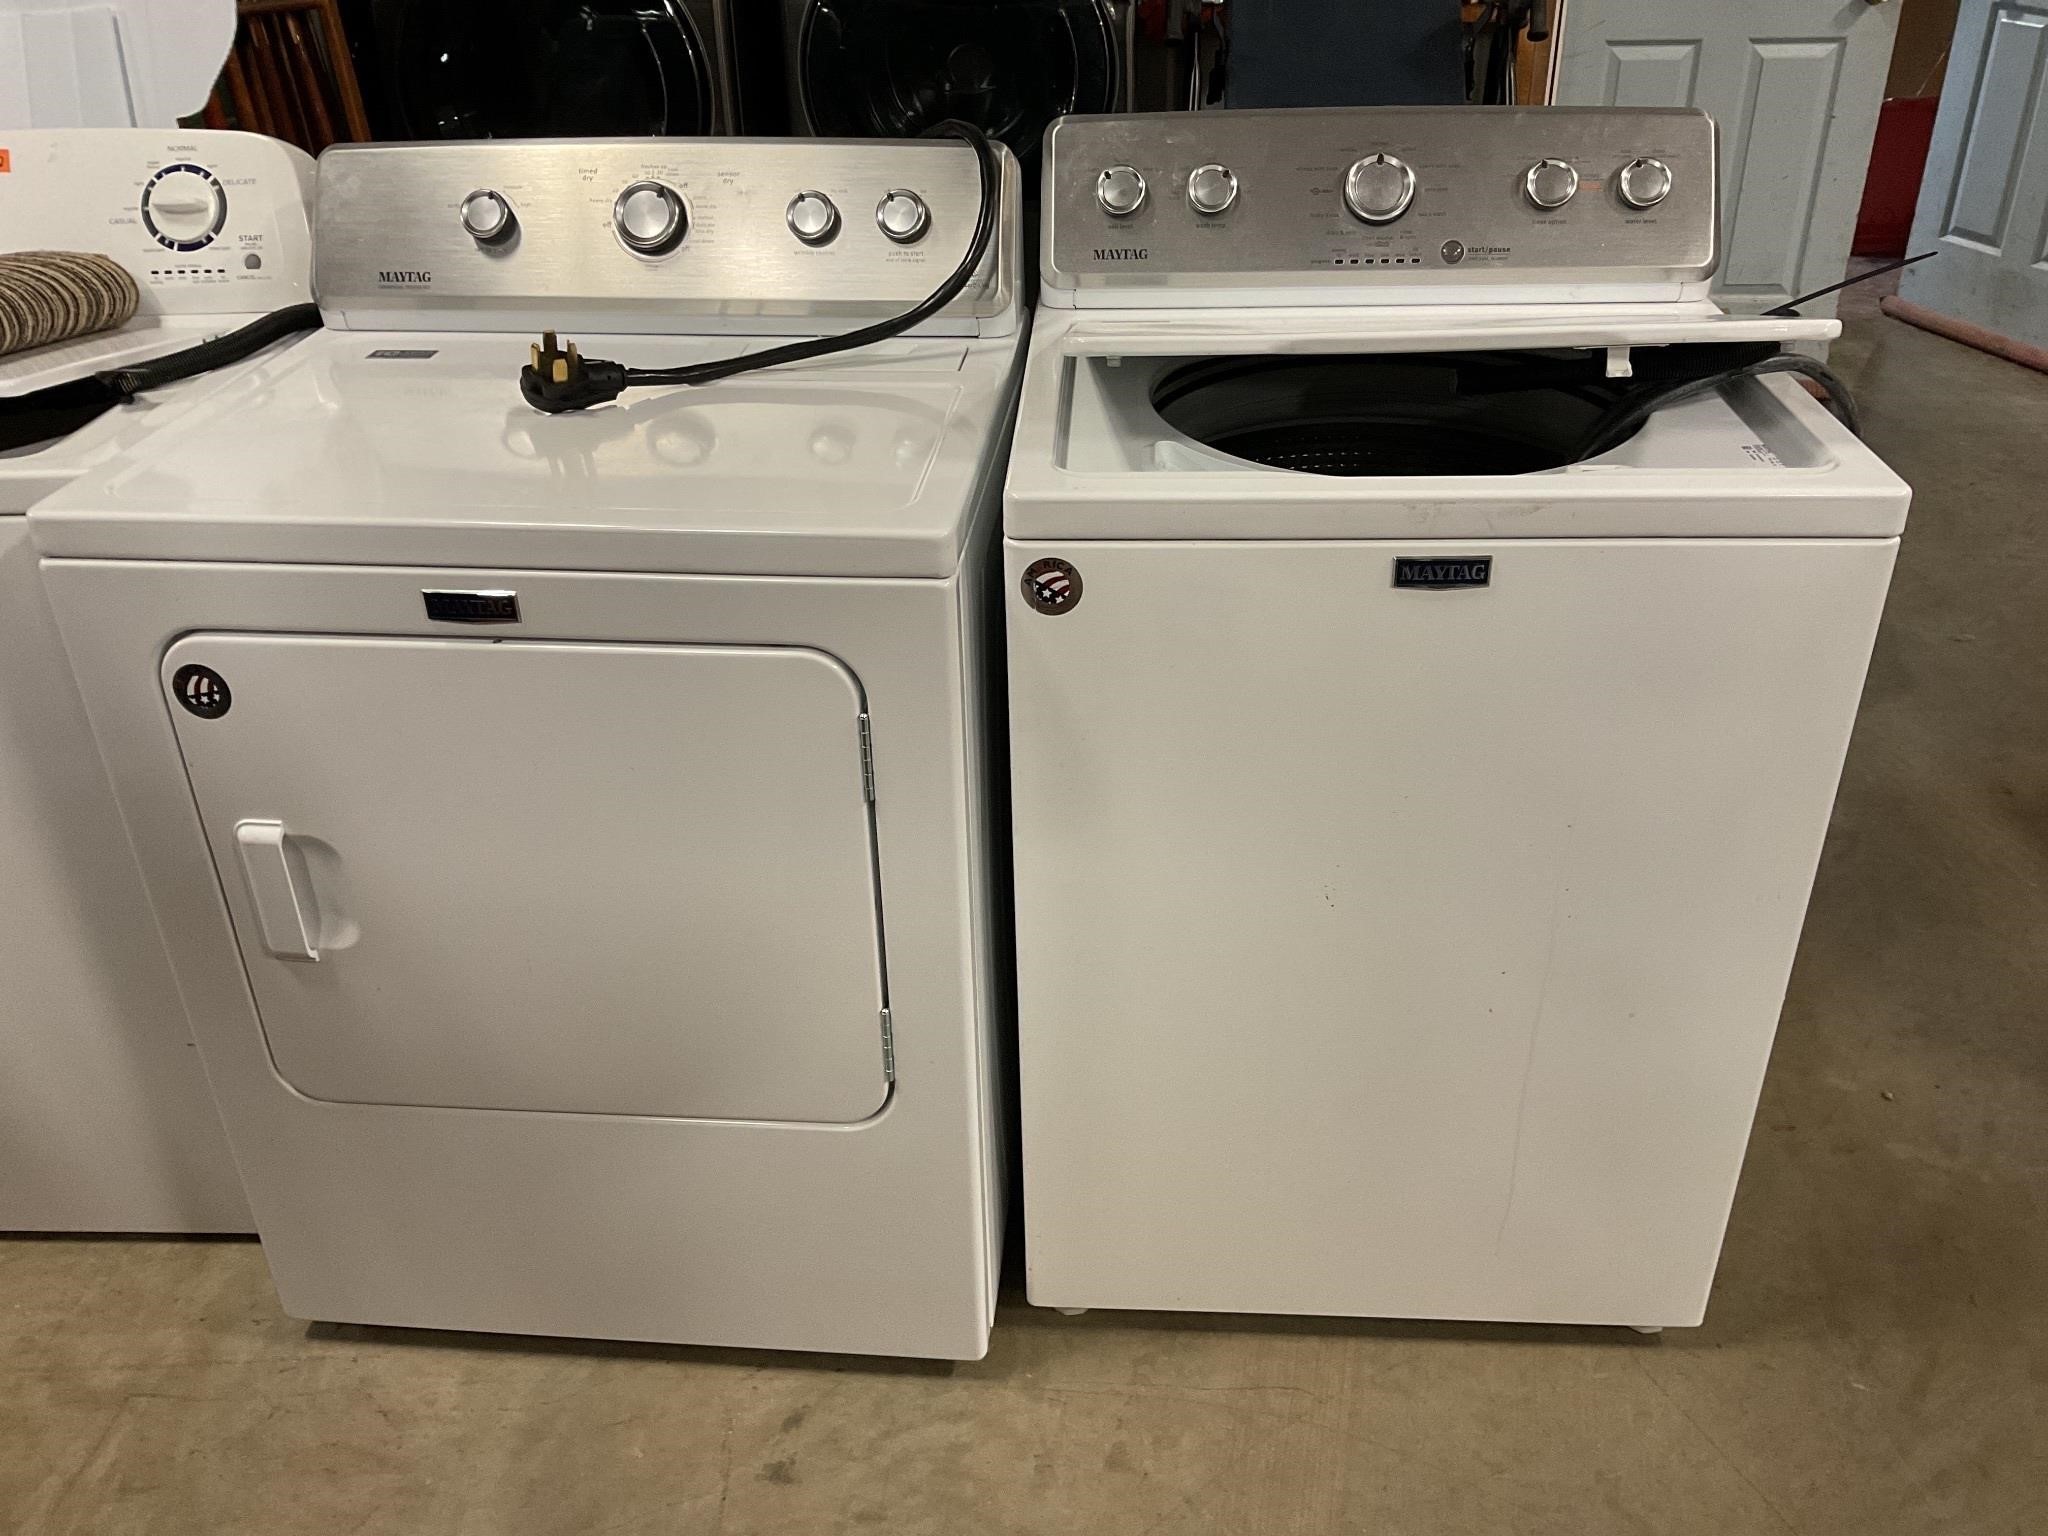 Matching Maytag washer & dryer